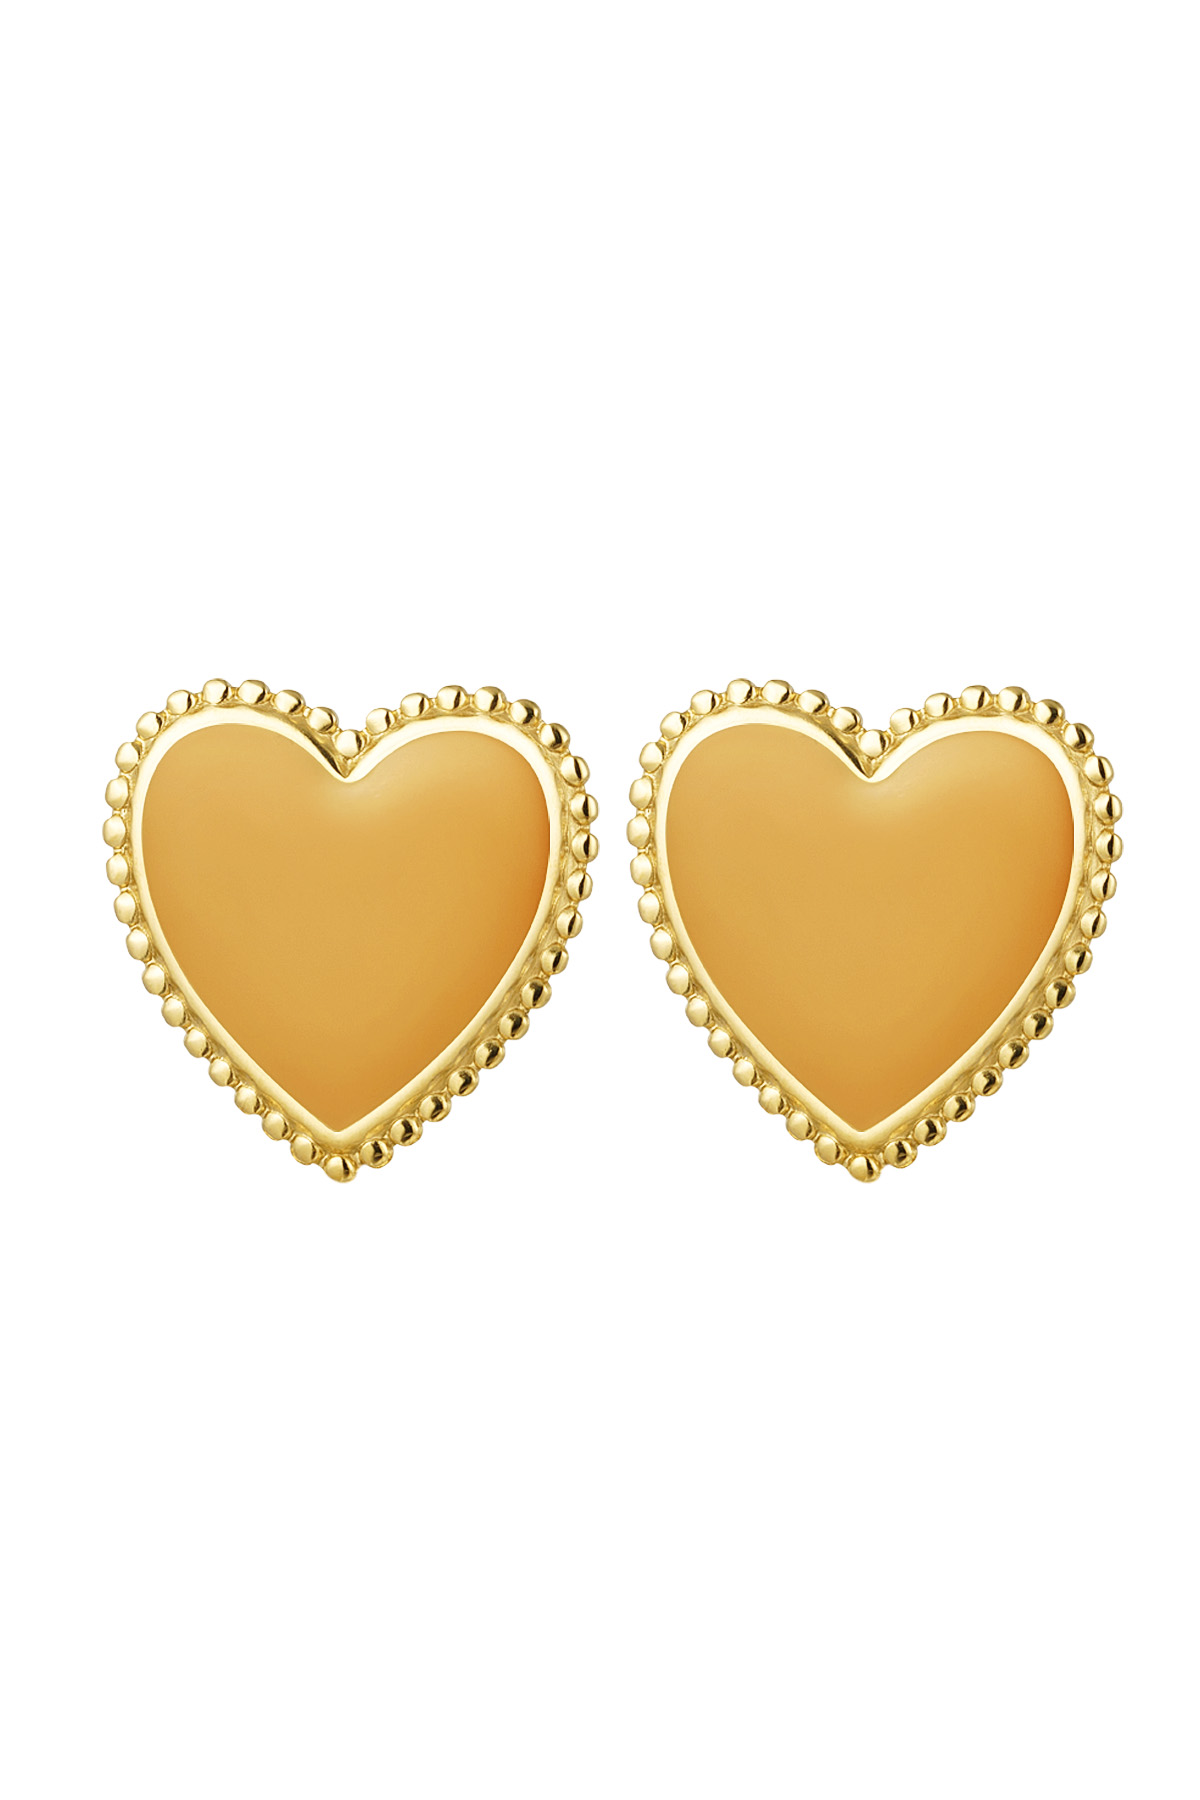 Stud earrings heart chic - mustard Stainless Steel